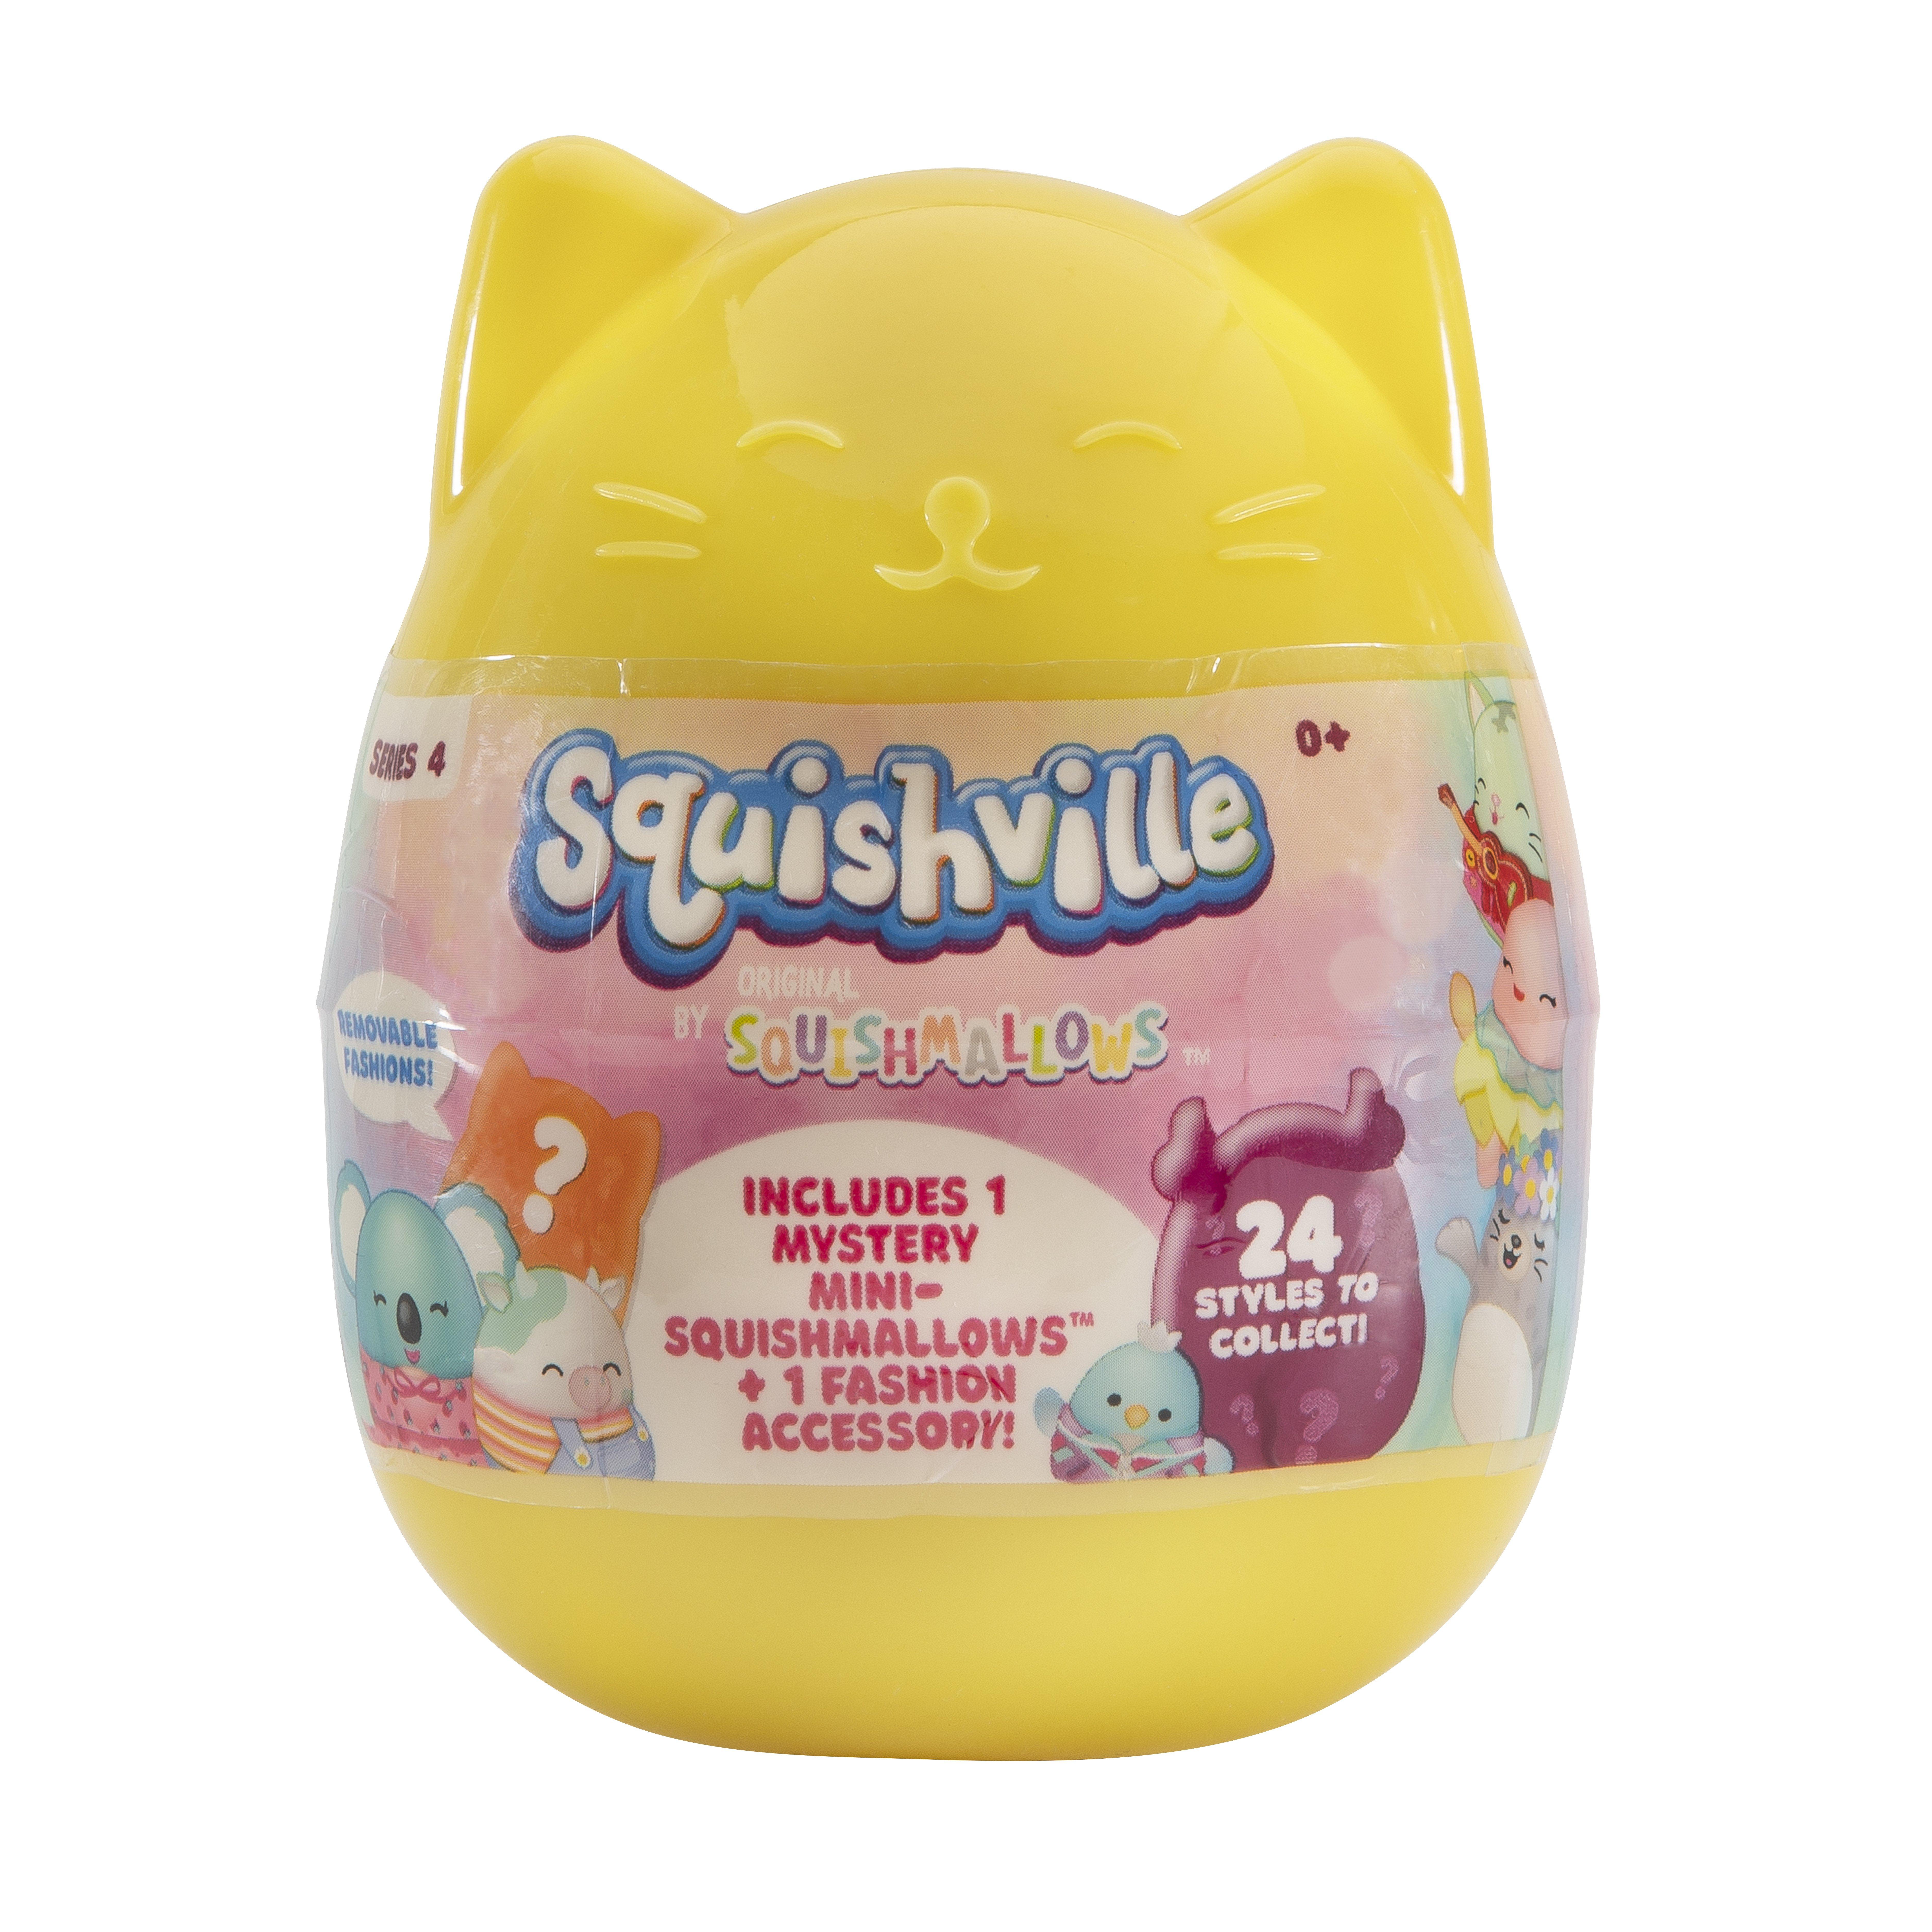 Squishville by Original Squishmallows 